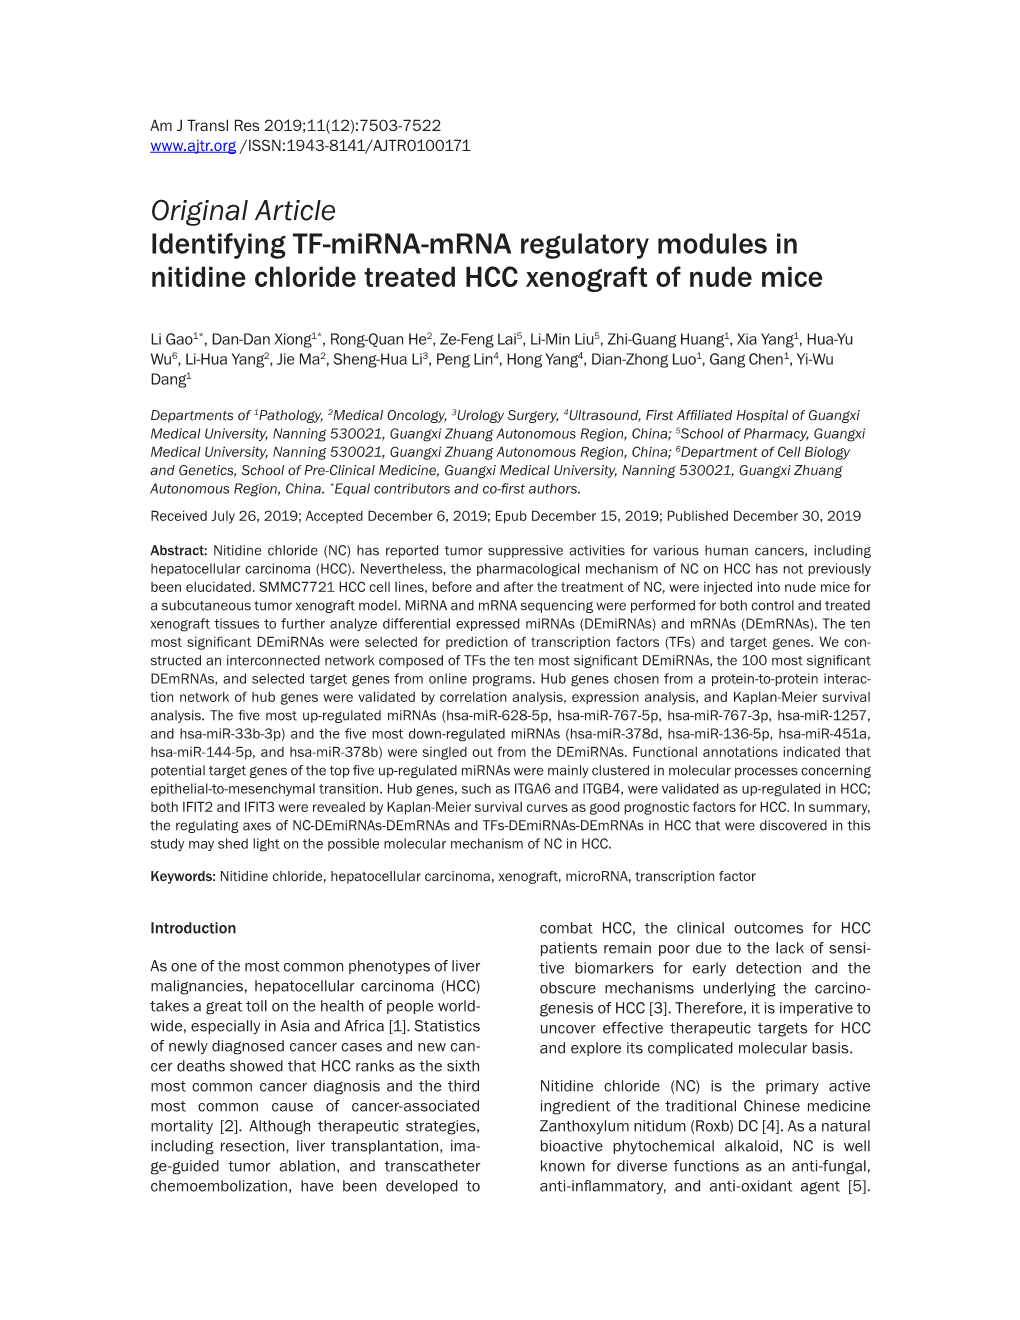 Original Article Identifying TF-Mirna-Mrna Regulatory Modules in Nitidine Chloride Treated HCC Xenograft of Nude Mice